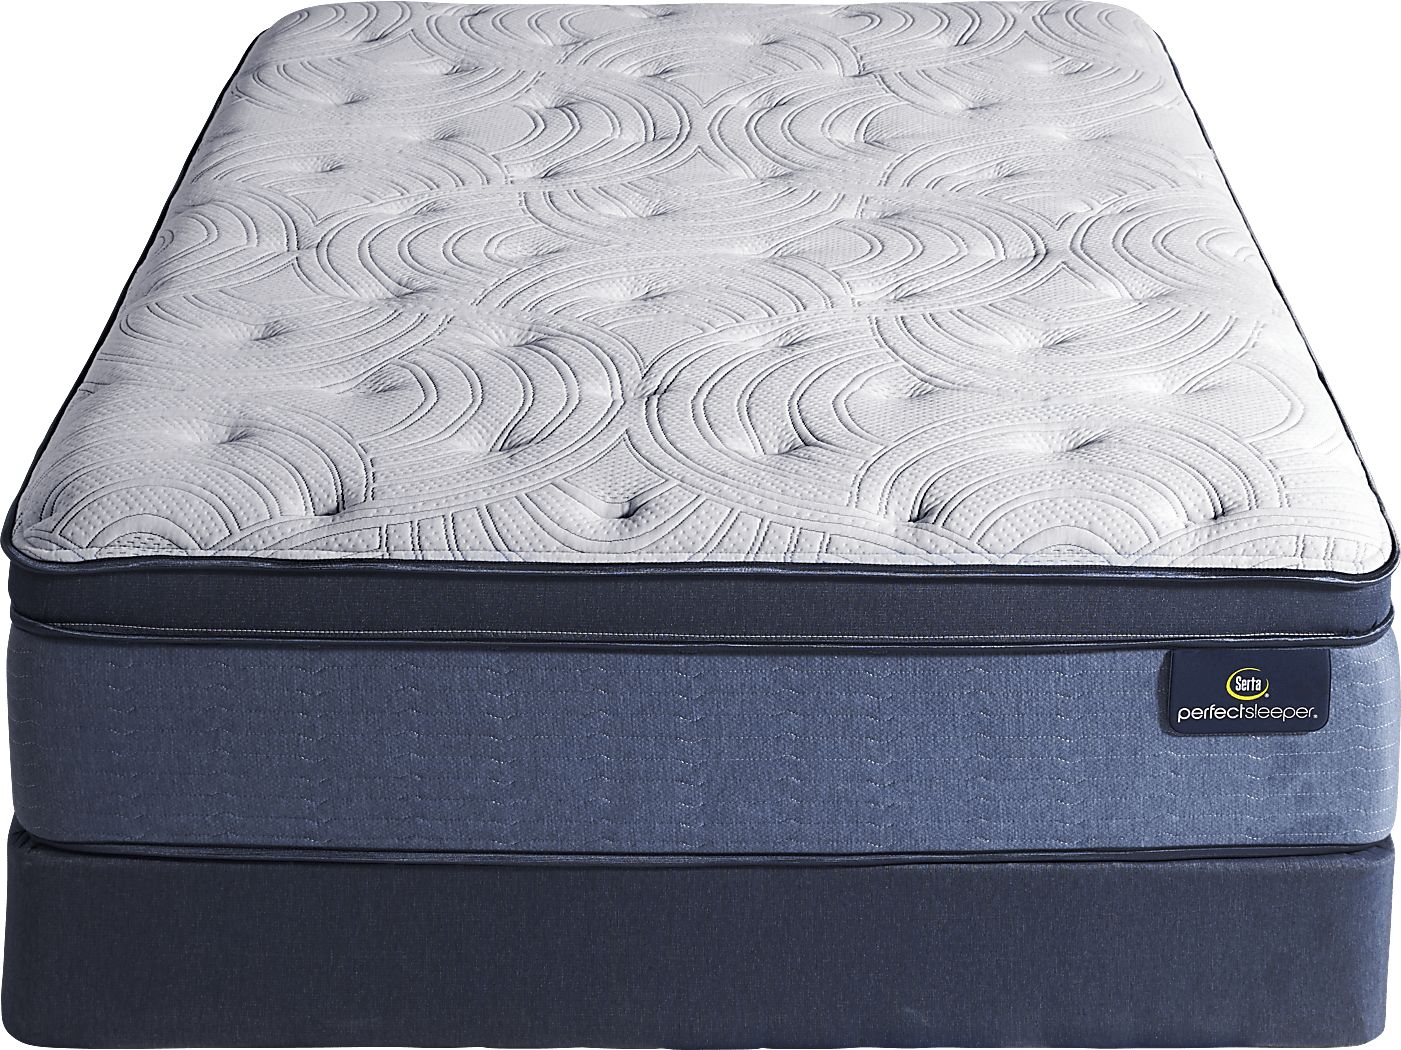 serta perfect sleeper alesbury 8 plush mattress